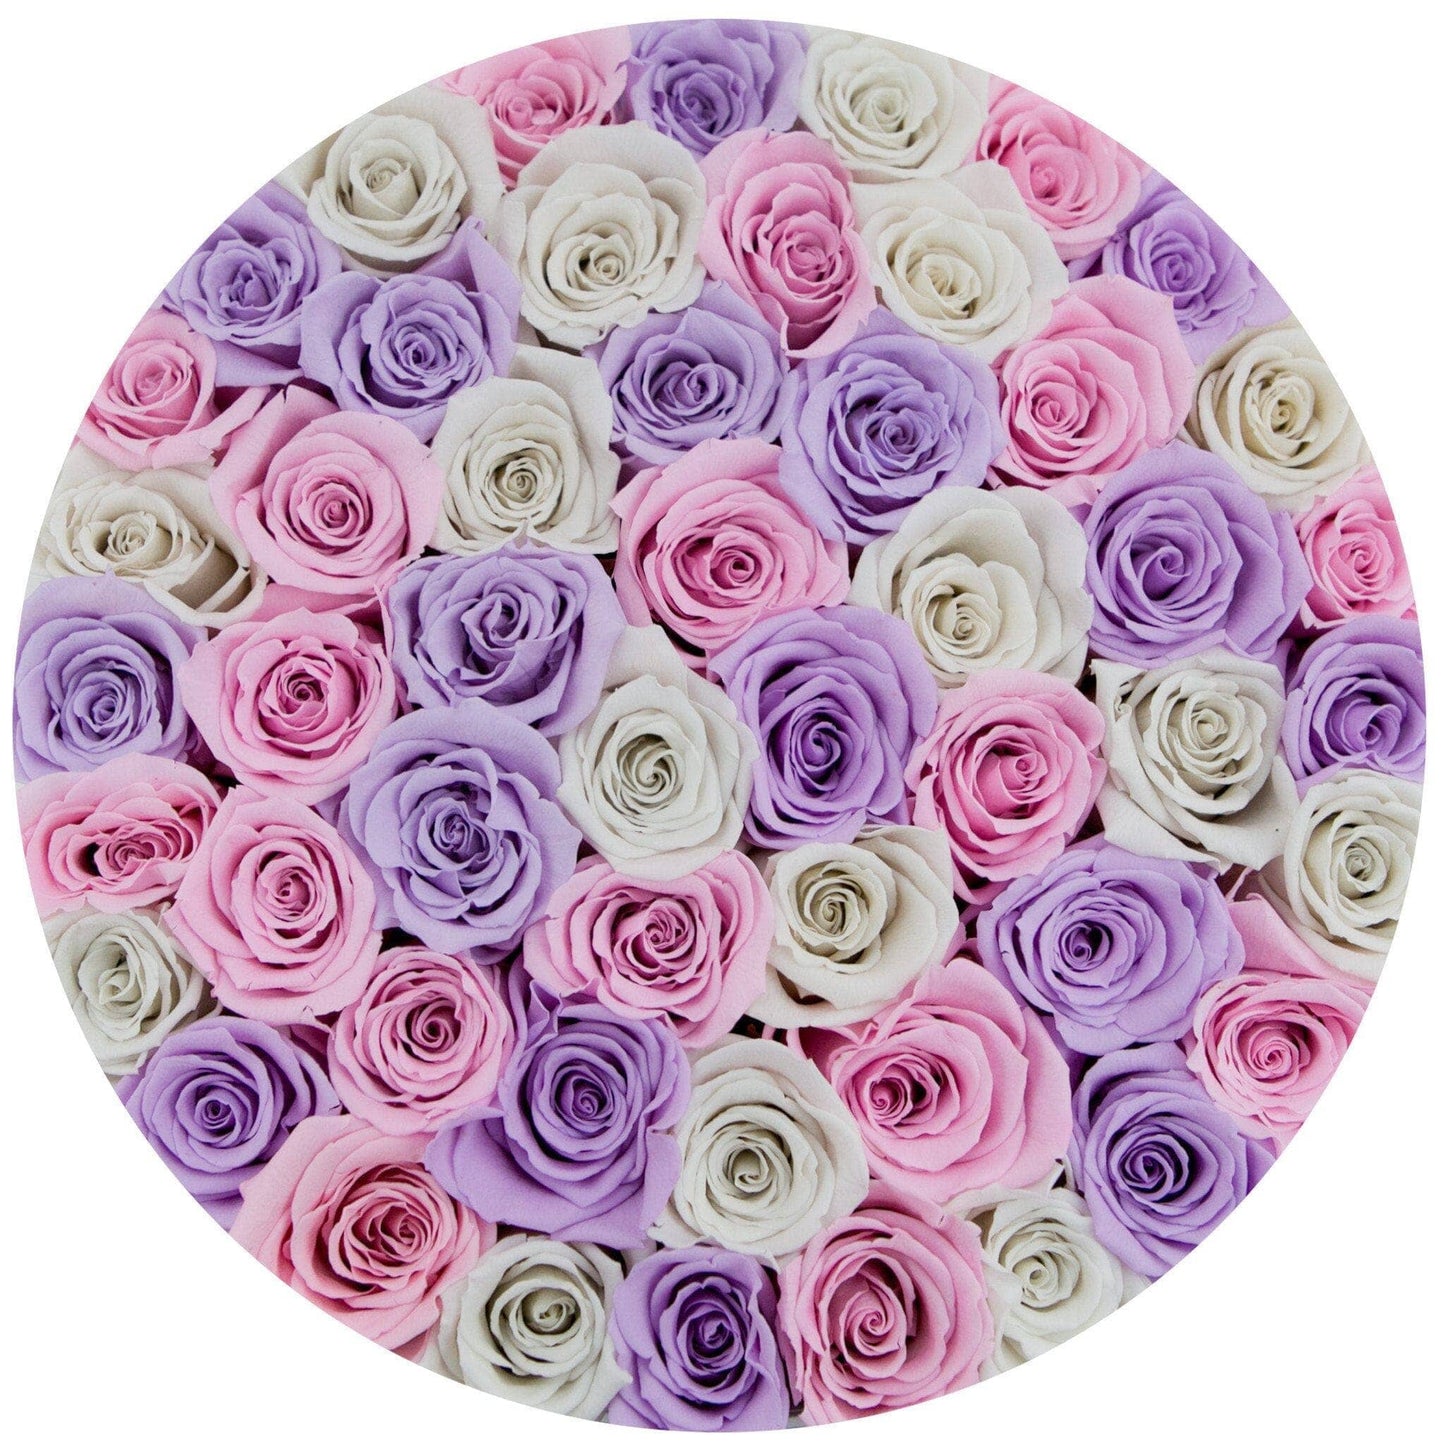 Supreme White Box | White & Pink & Lavender Roses - The Million Roses